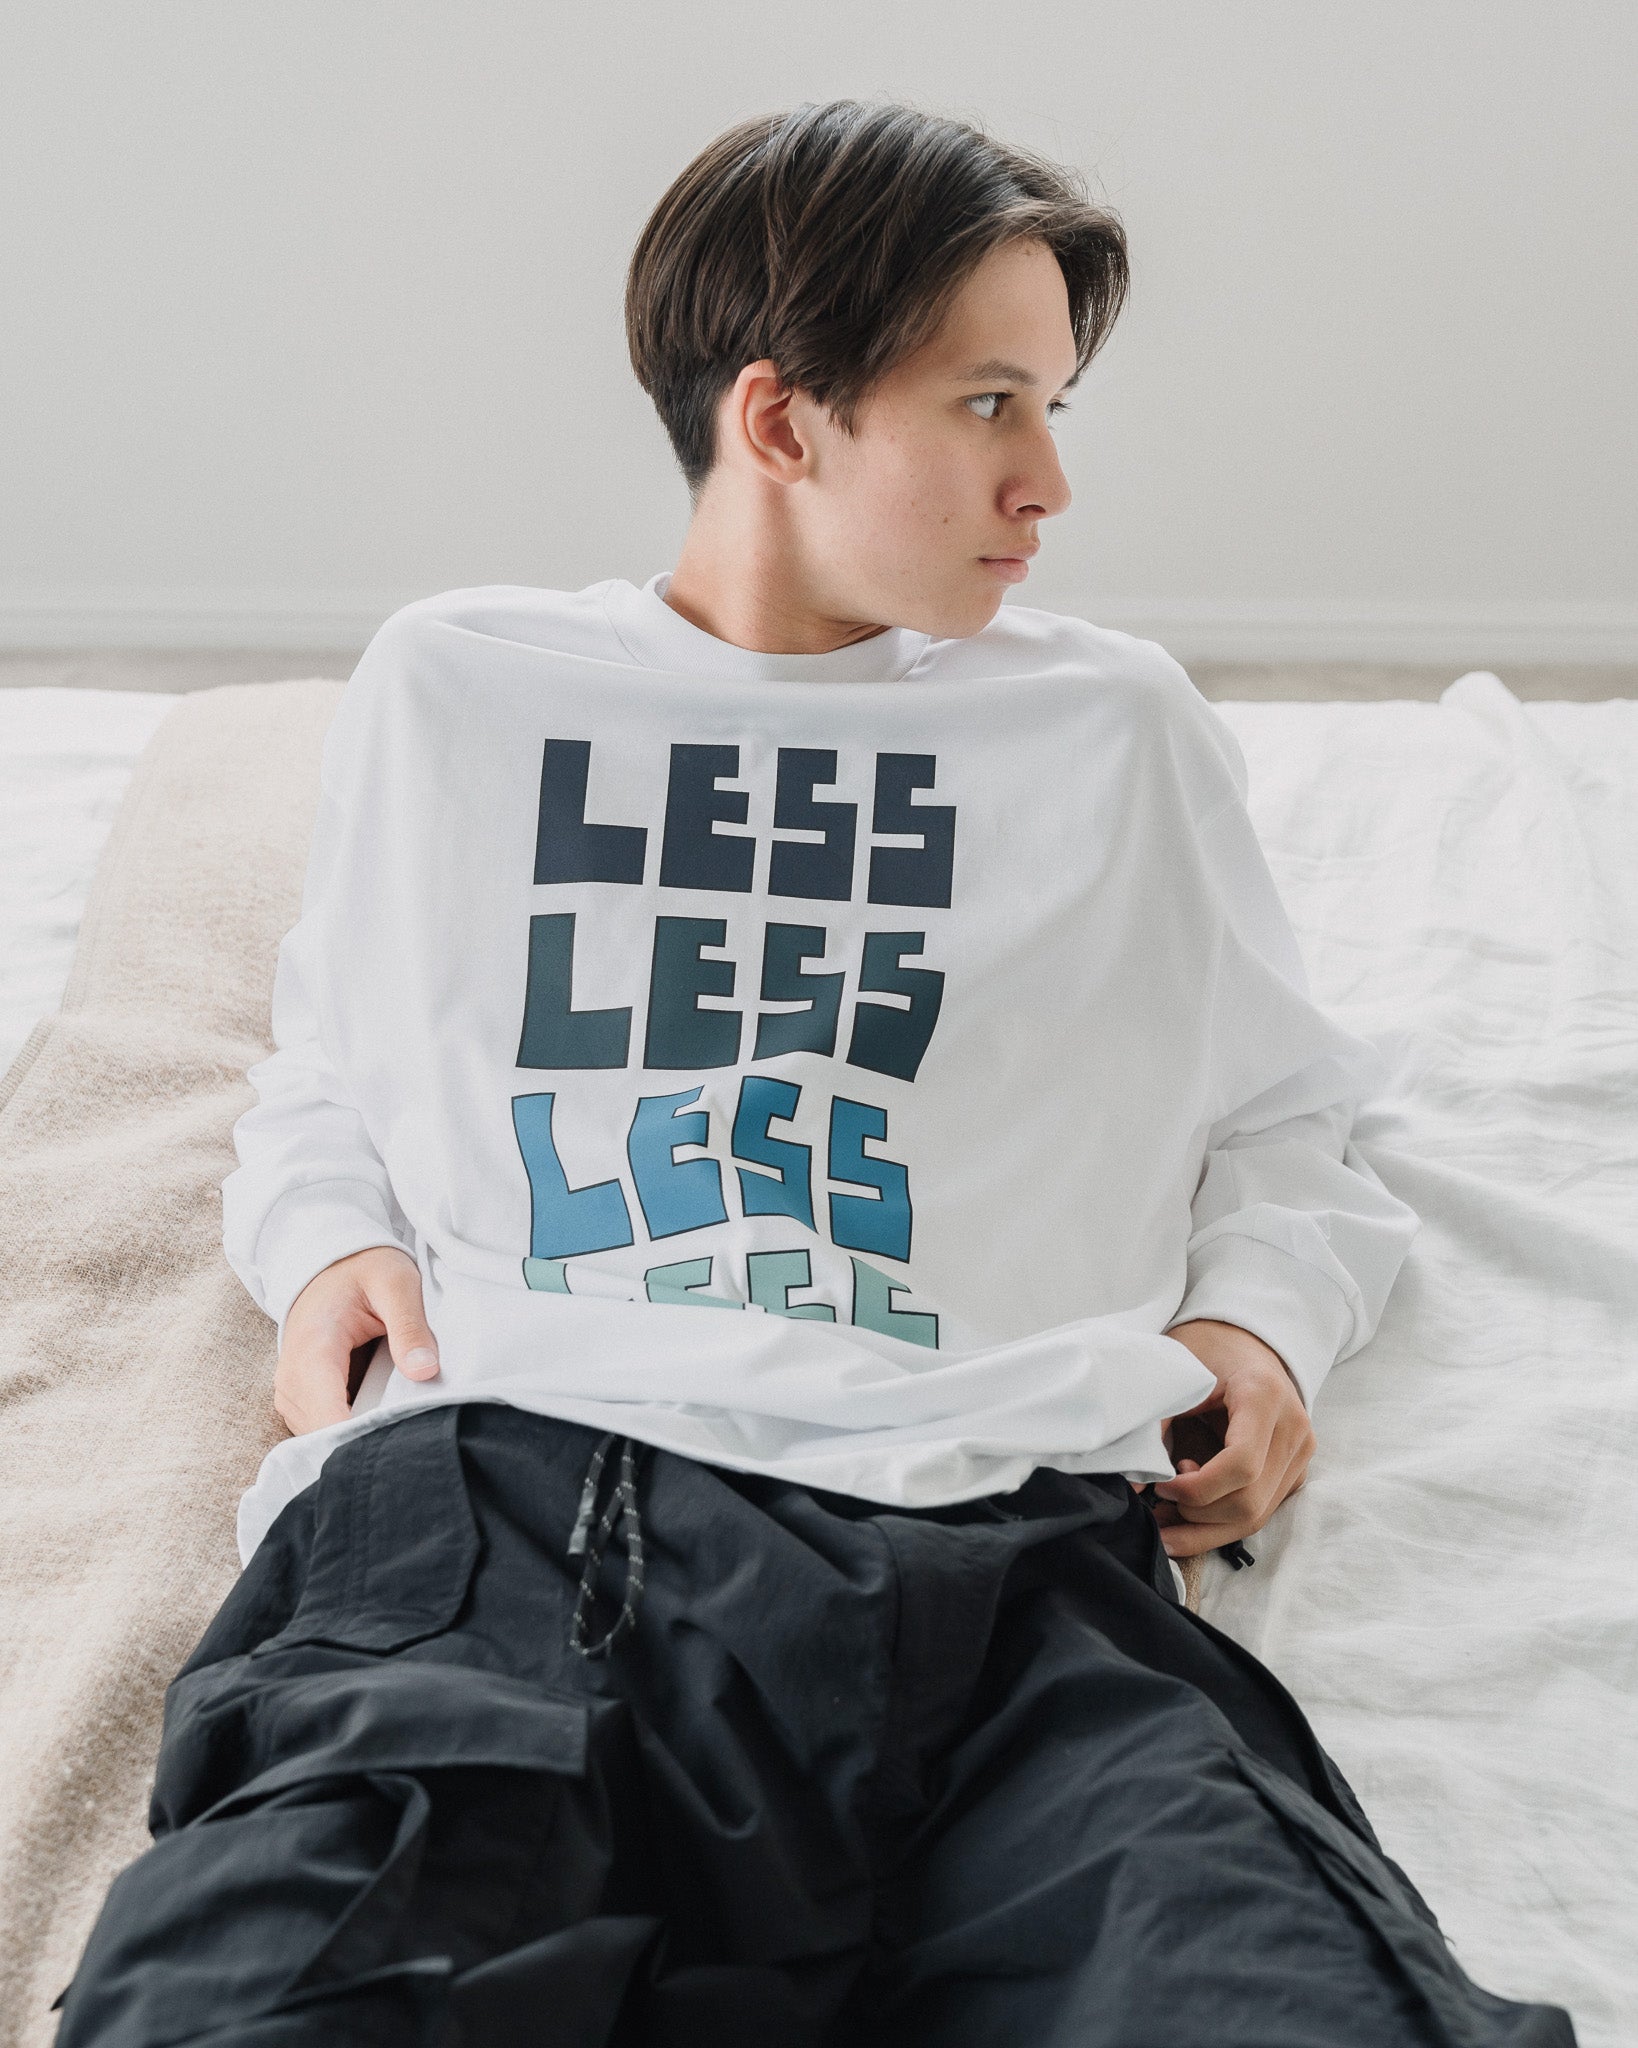 "LESS" MASSIVE T-SHIRT WITH DRAWSTRINGS